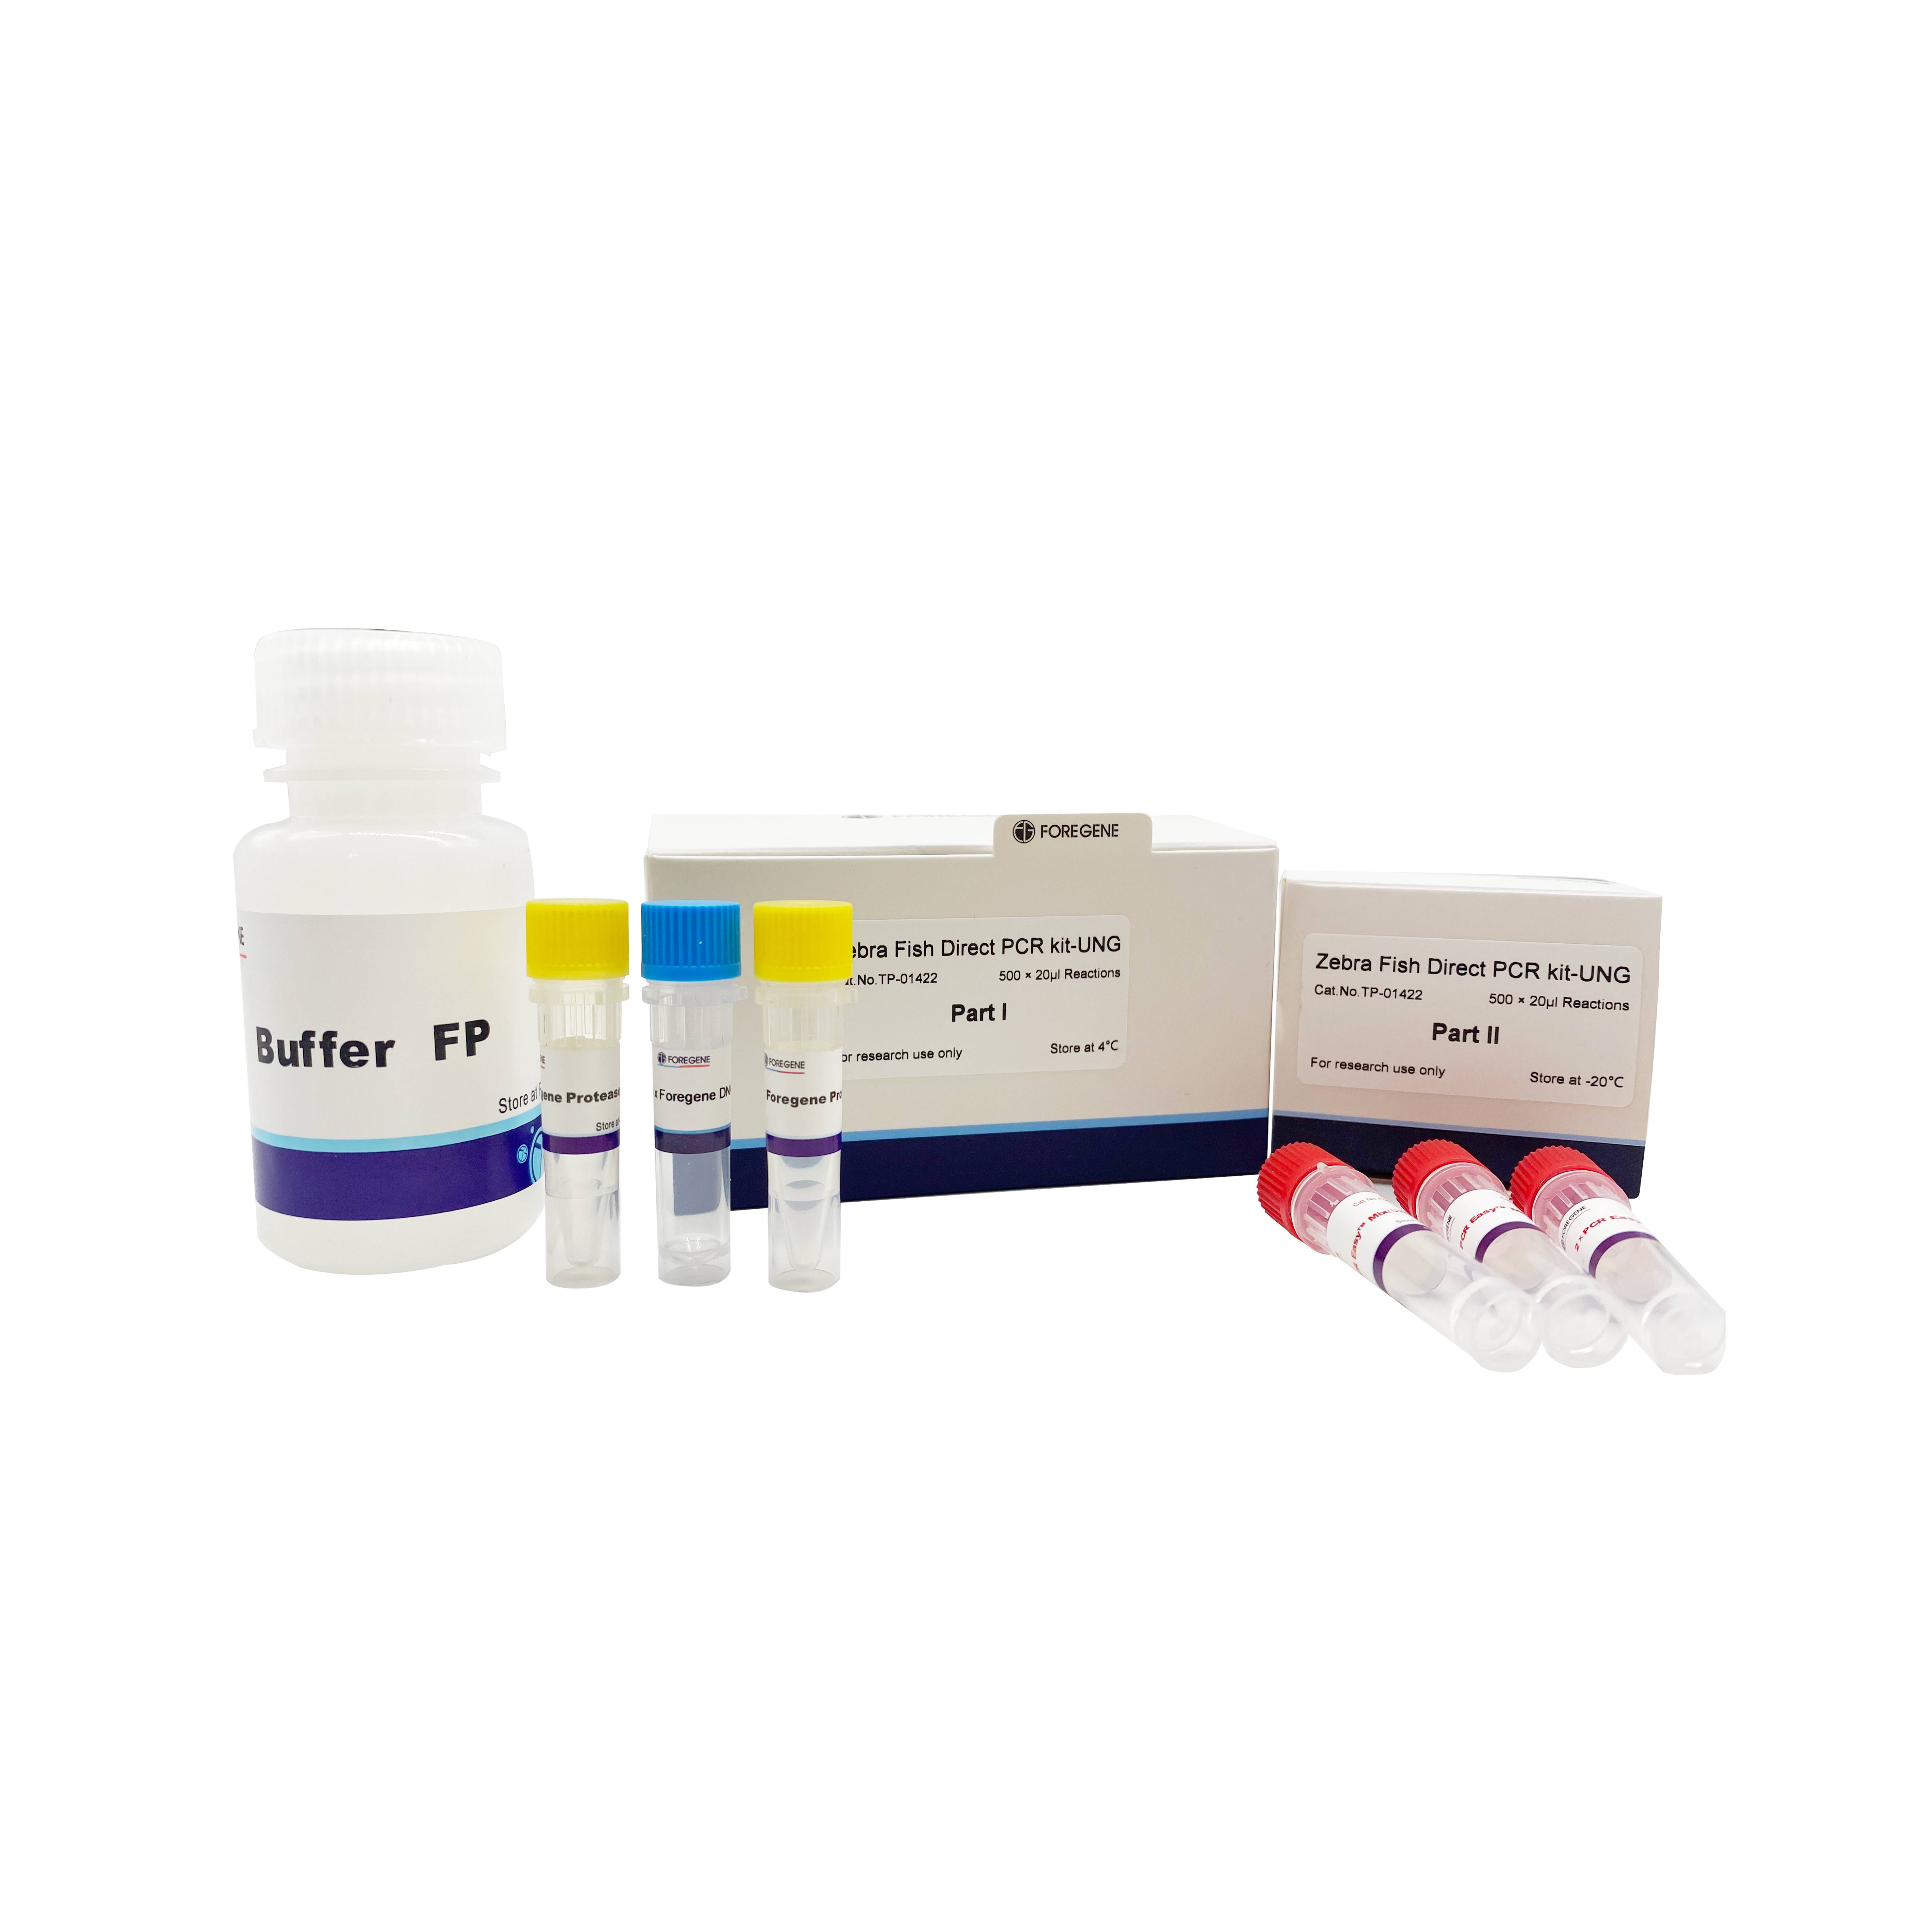 Zebra Fish Direct PCR Kit-UNG Direct PCR Lysis Reagent(zebrafish)